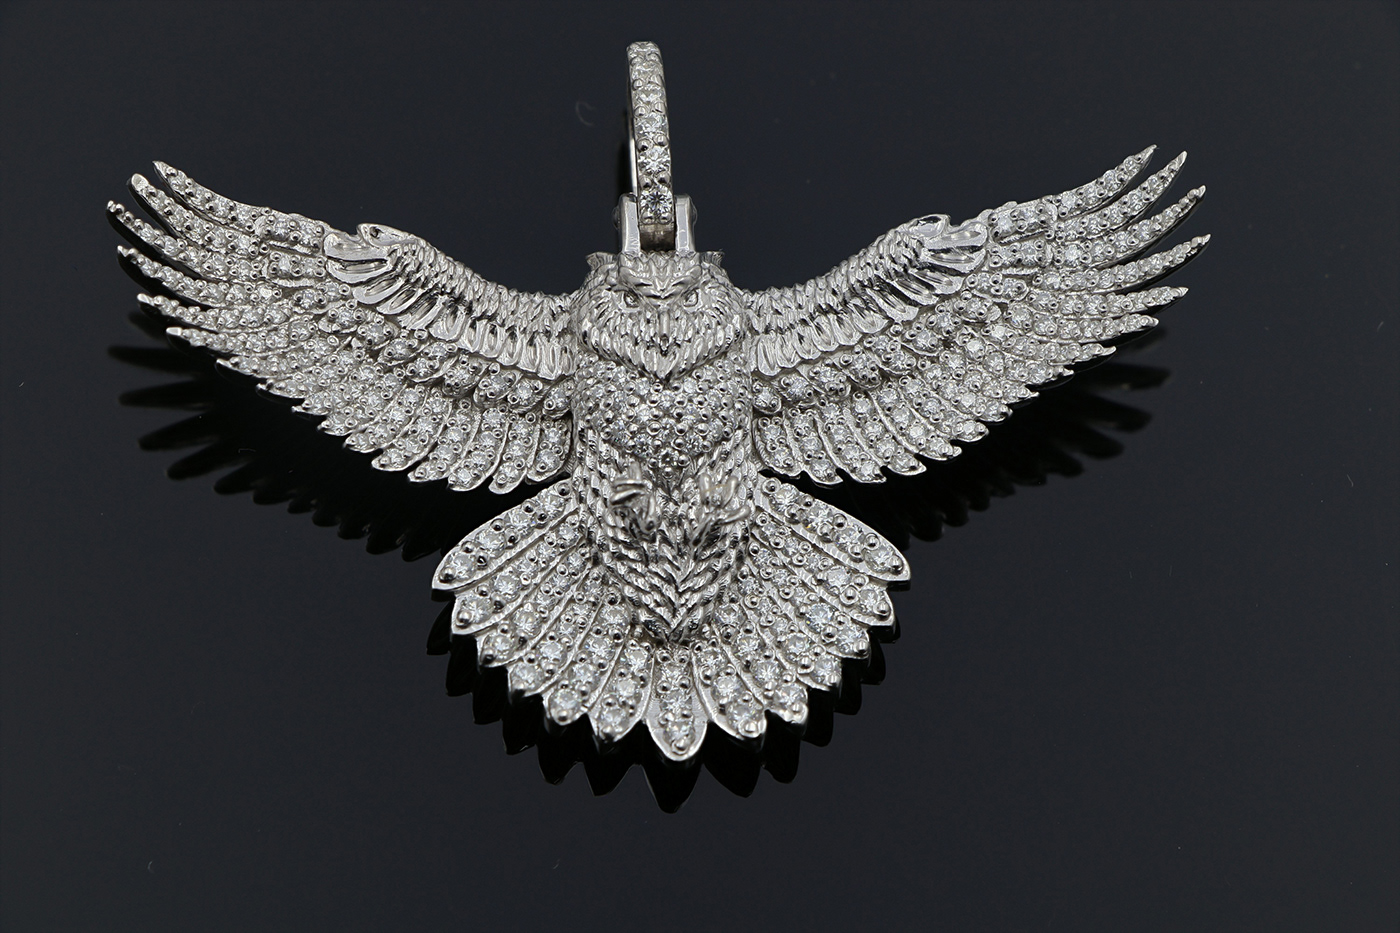 3dmodel 3dmodeling 3dowl newmodeling owl owlmodel owlsculpture pendant sculpture